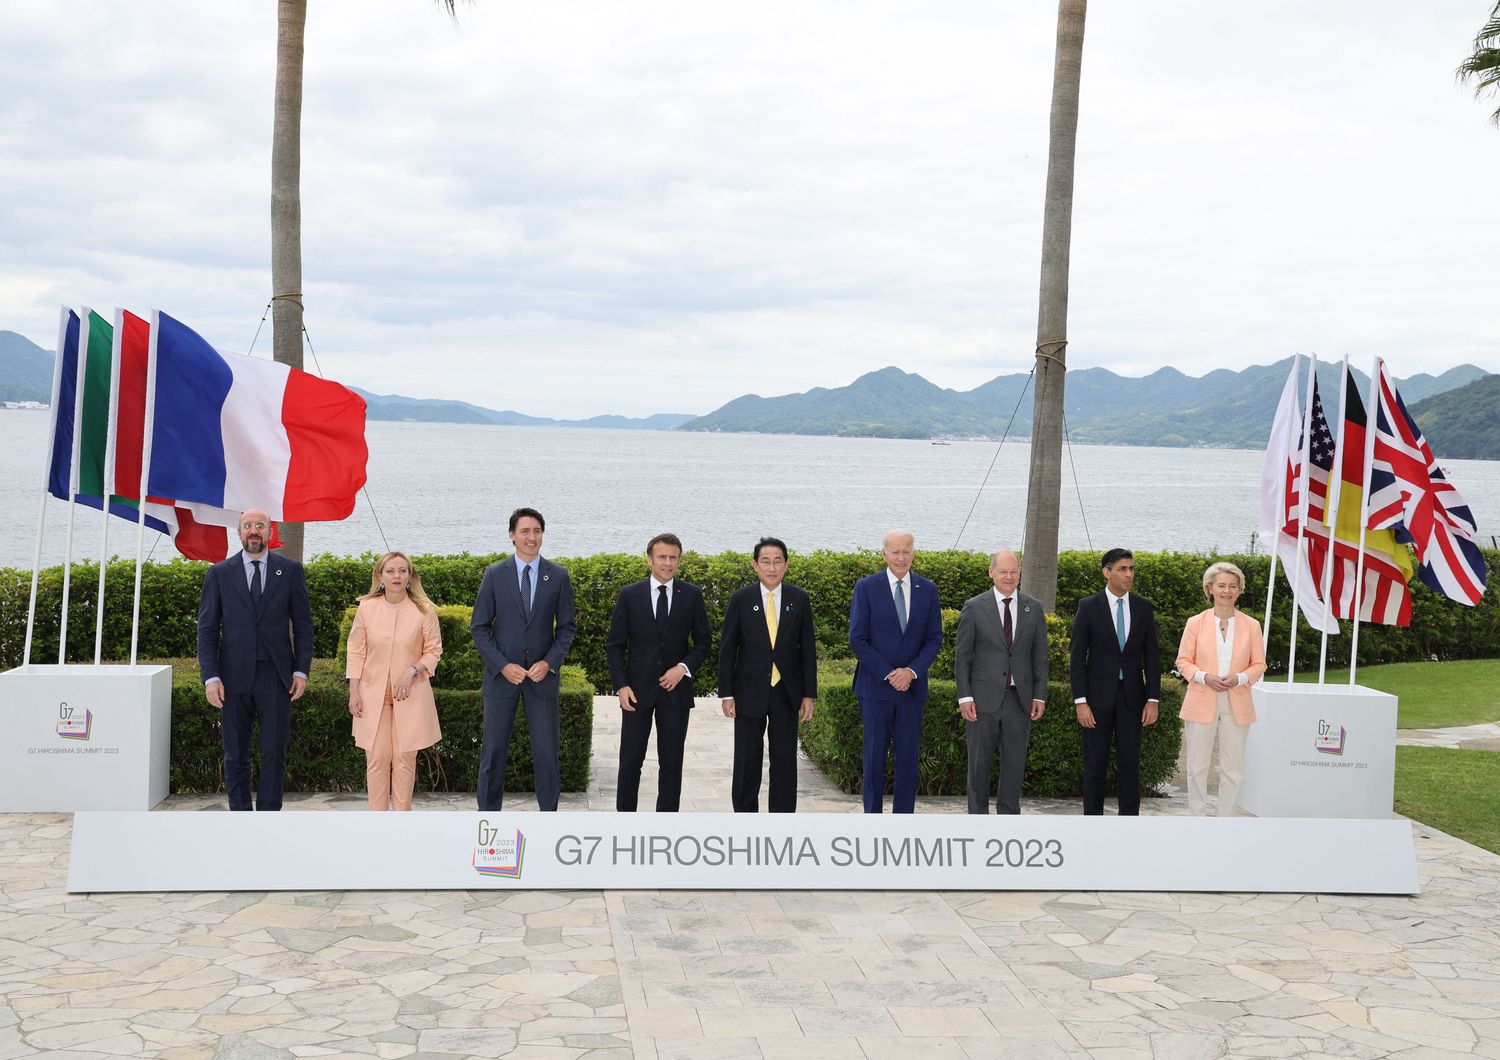 La foto dei leader del G7 di Hiroshima&nbsp;